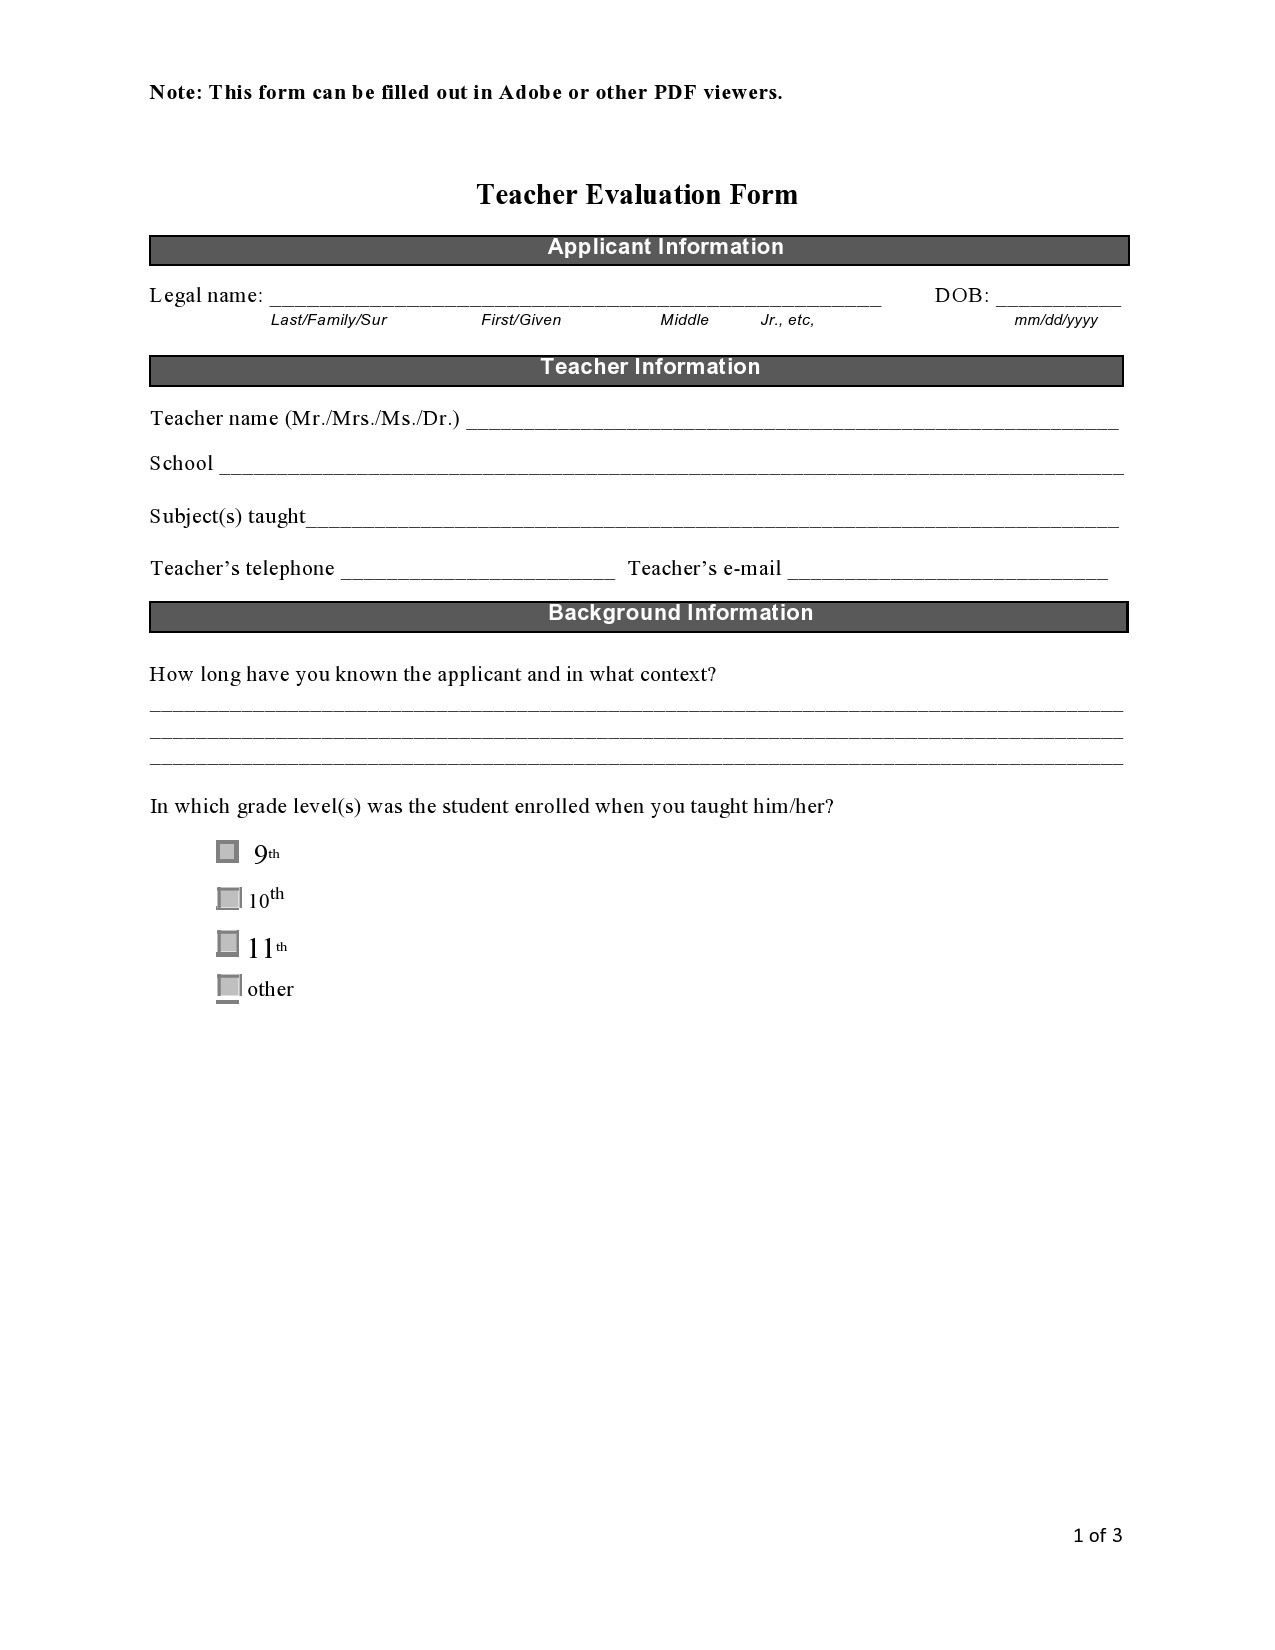 Free teacher evaluation form 26